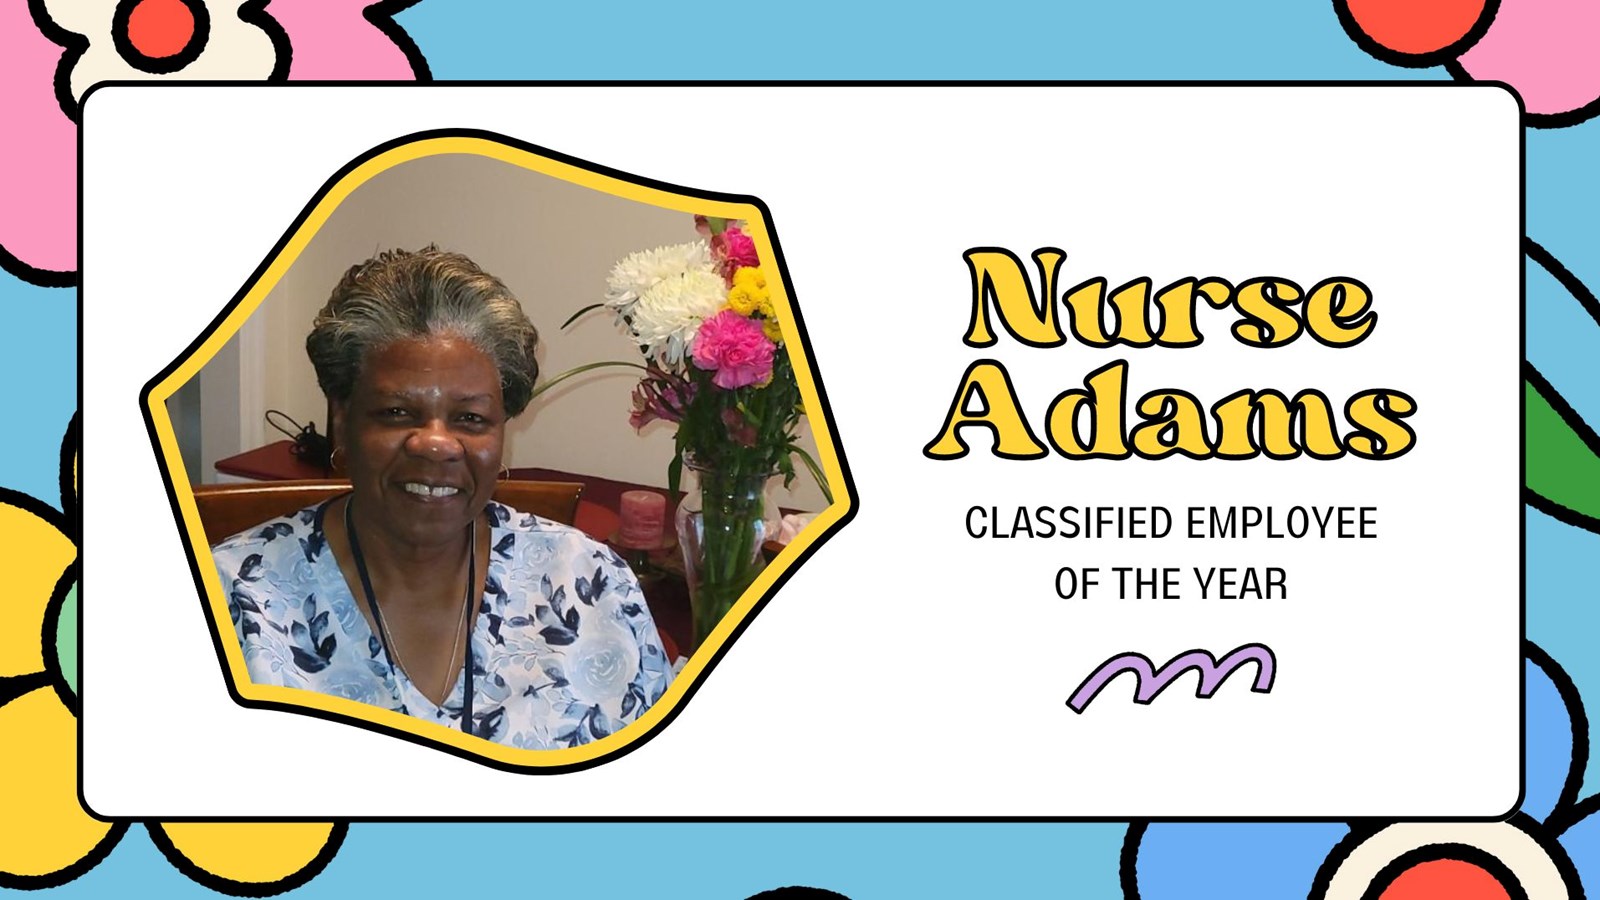 cartoon flower background. Picture of Nurse Adams.  Text reads "Nurse Adams Classified Employee of the Year